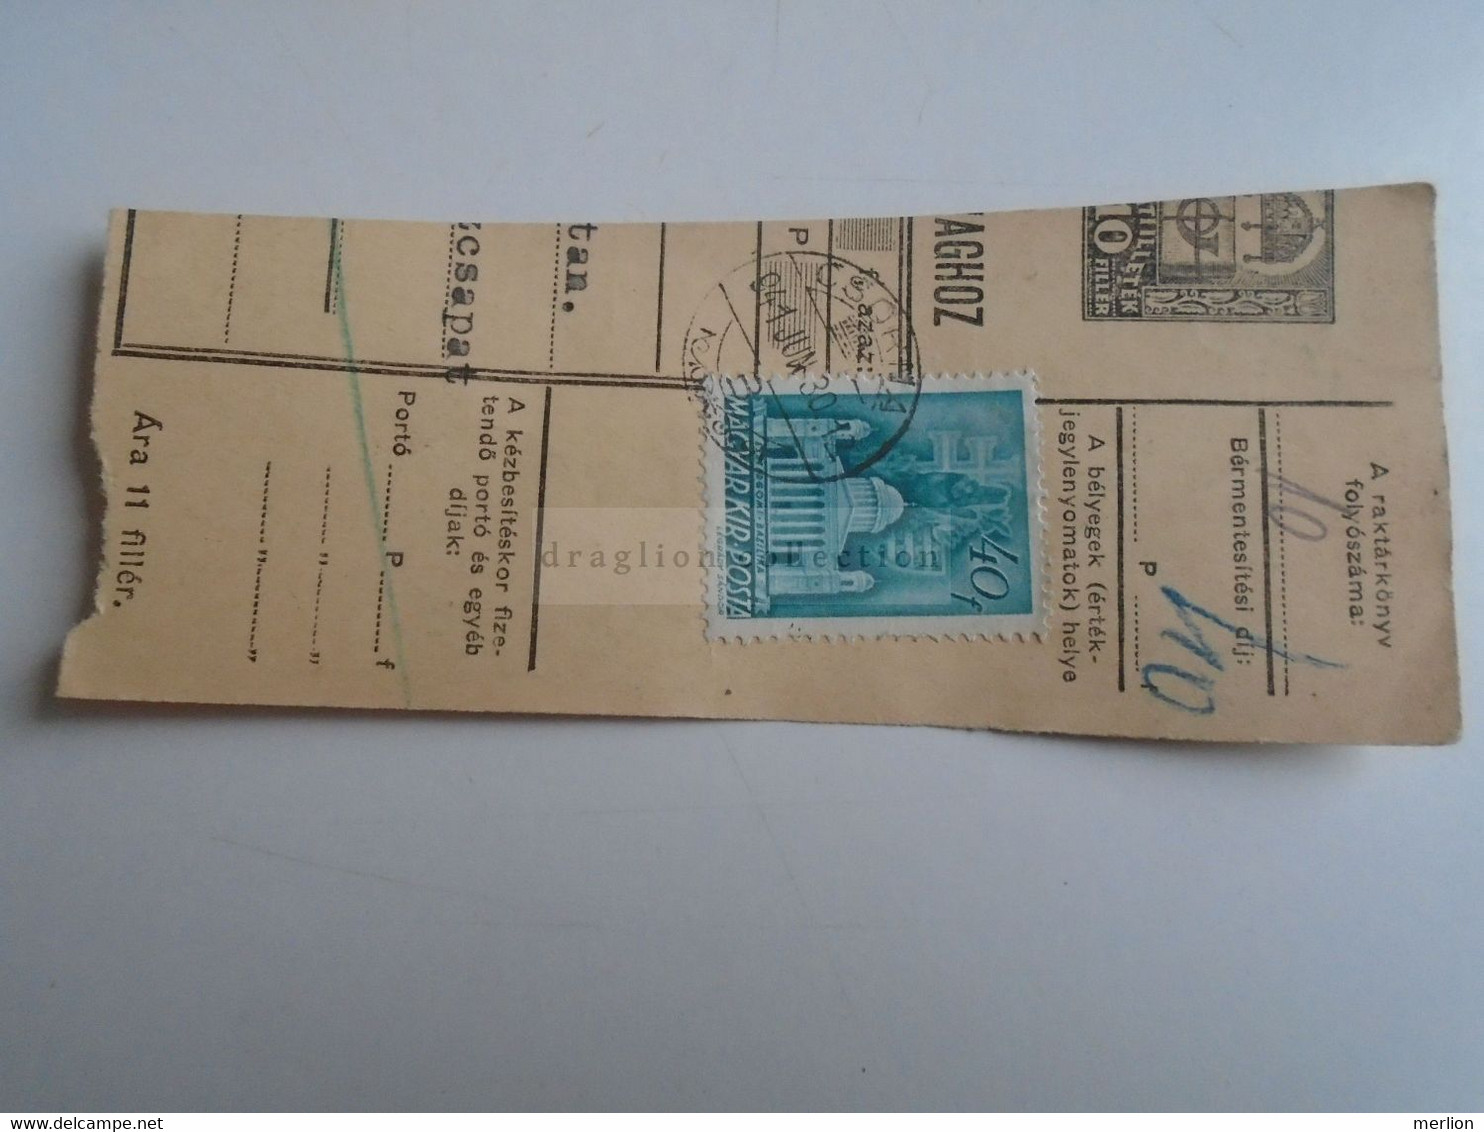 D187435   Parcel Card  (cut) Hungary 1941 CSORNA  -Kapuvár - Paketmarken